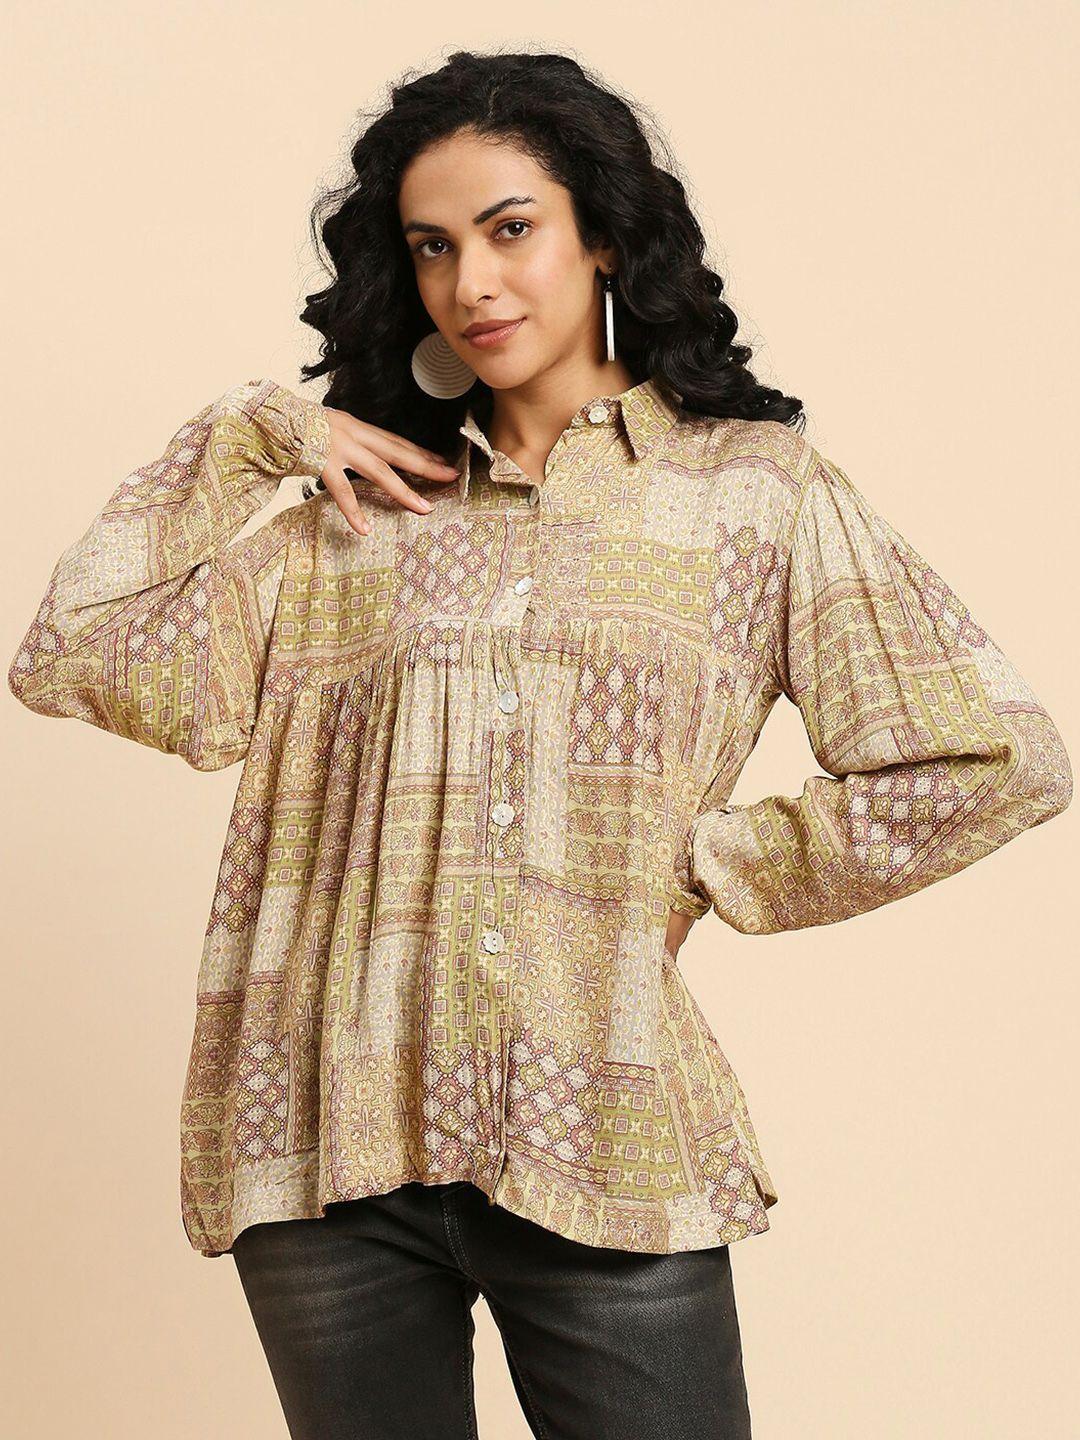 gufrina-ethnic-motif-printed-shirt-collar-gathered-&-pleated-shirt-style-top